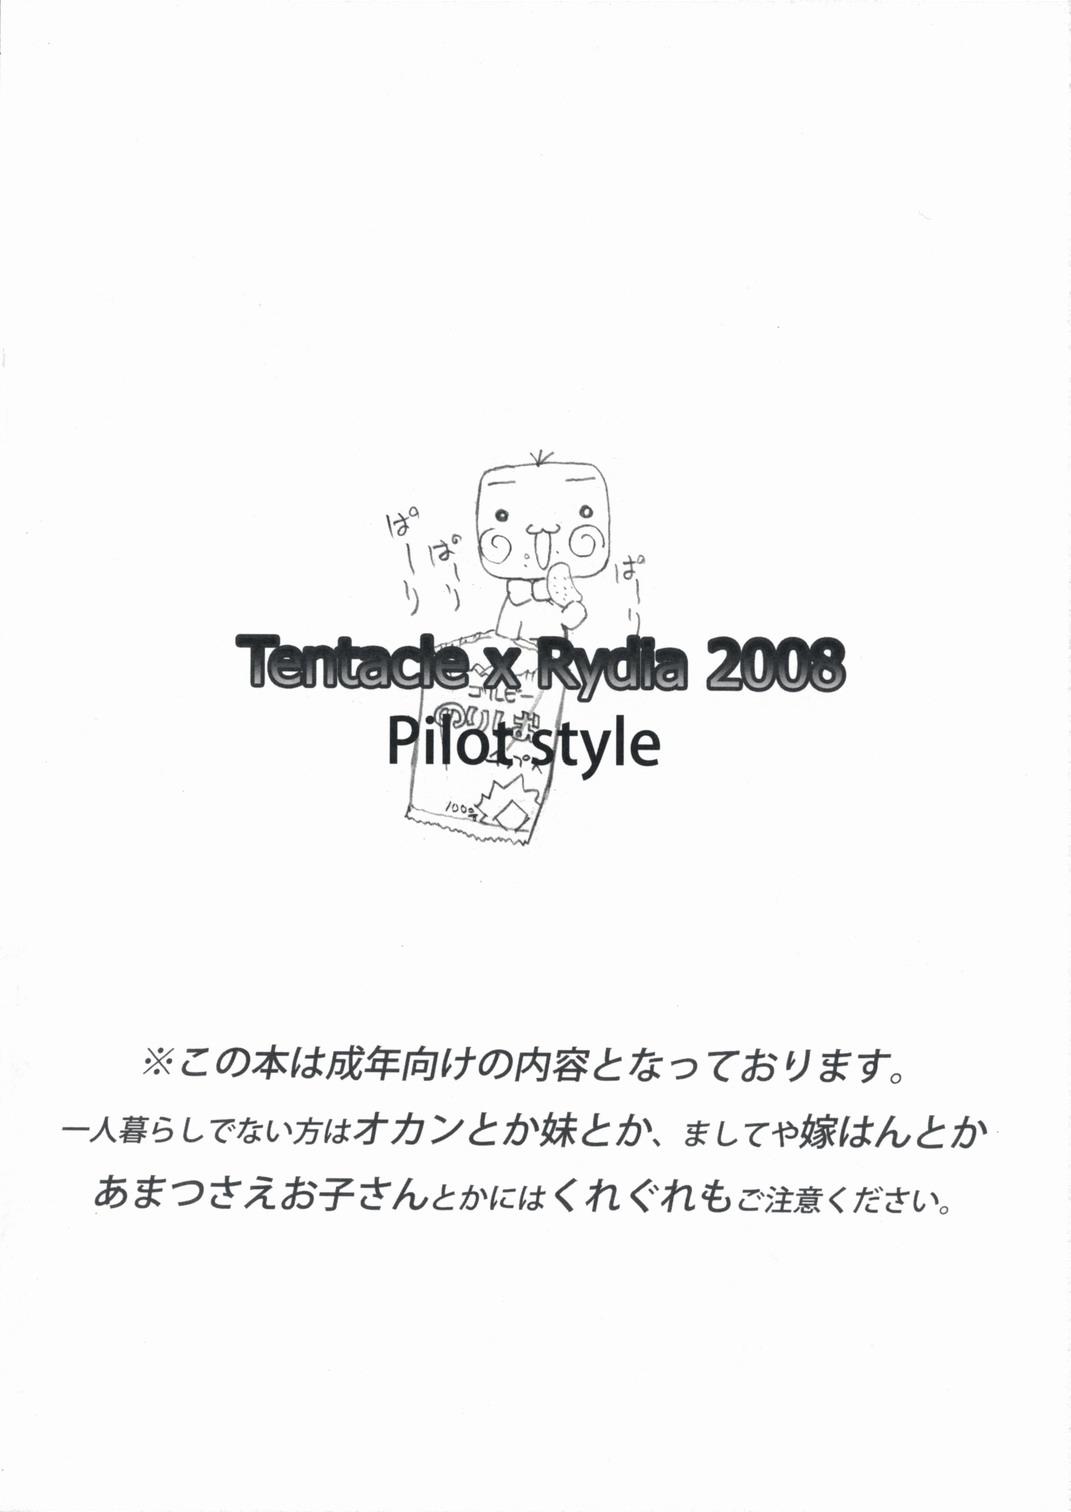 Nudes Shokushu x Rydia 2008 Otameshiban - Tentacle x Rydia 2008 Pilot Style - Final fantasy iv Brasileiro - Page 16